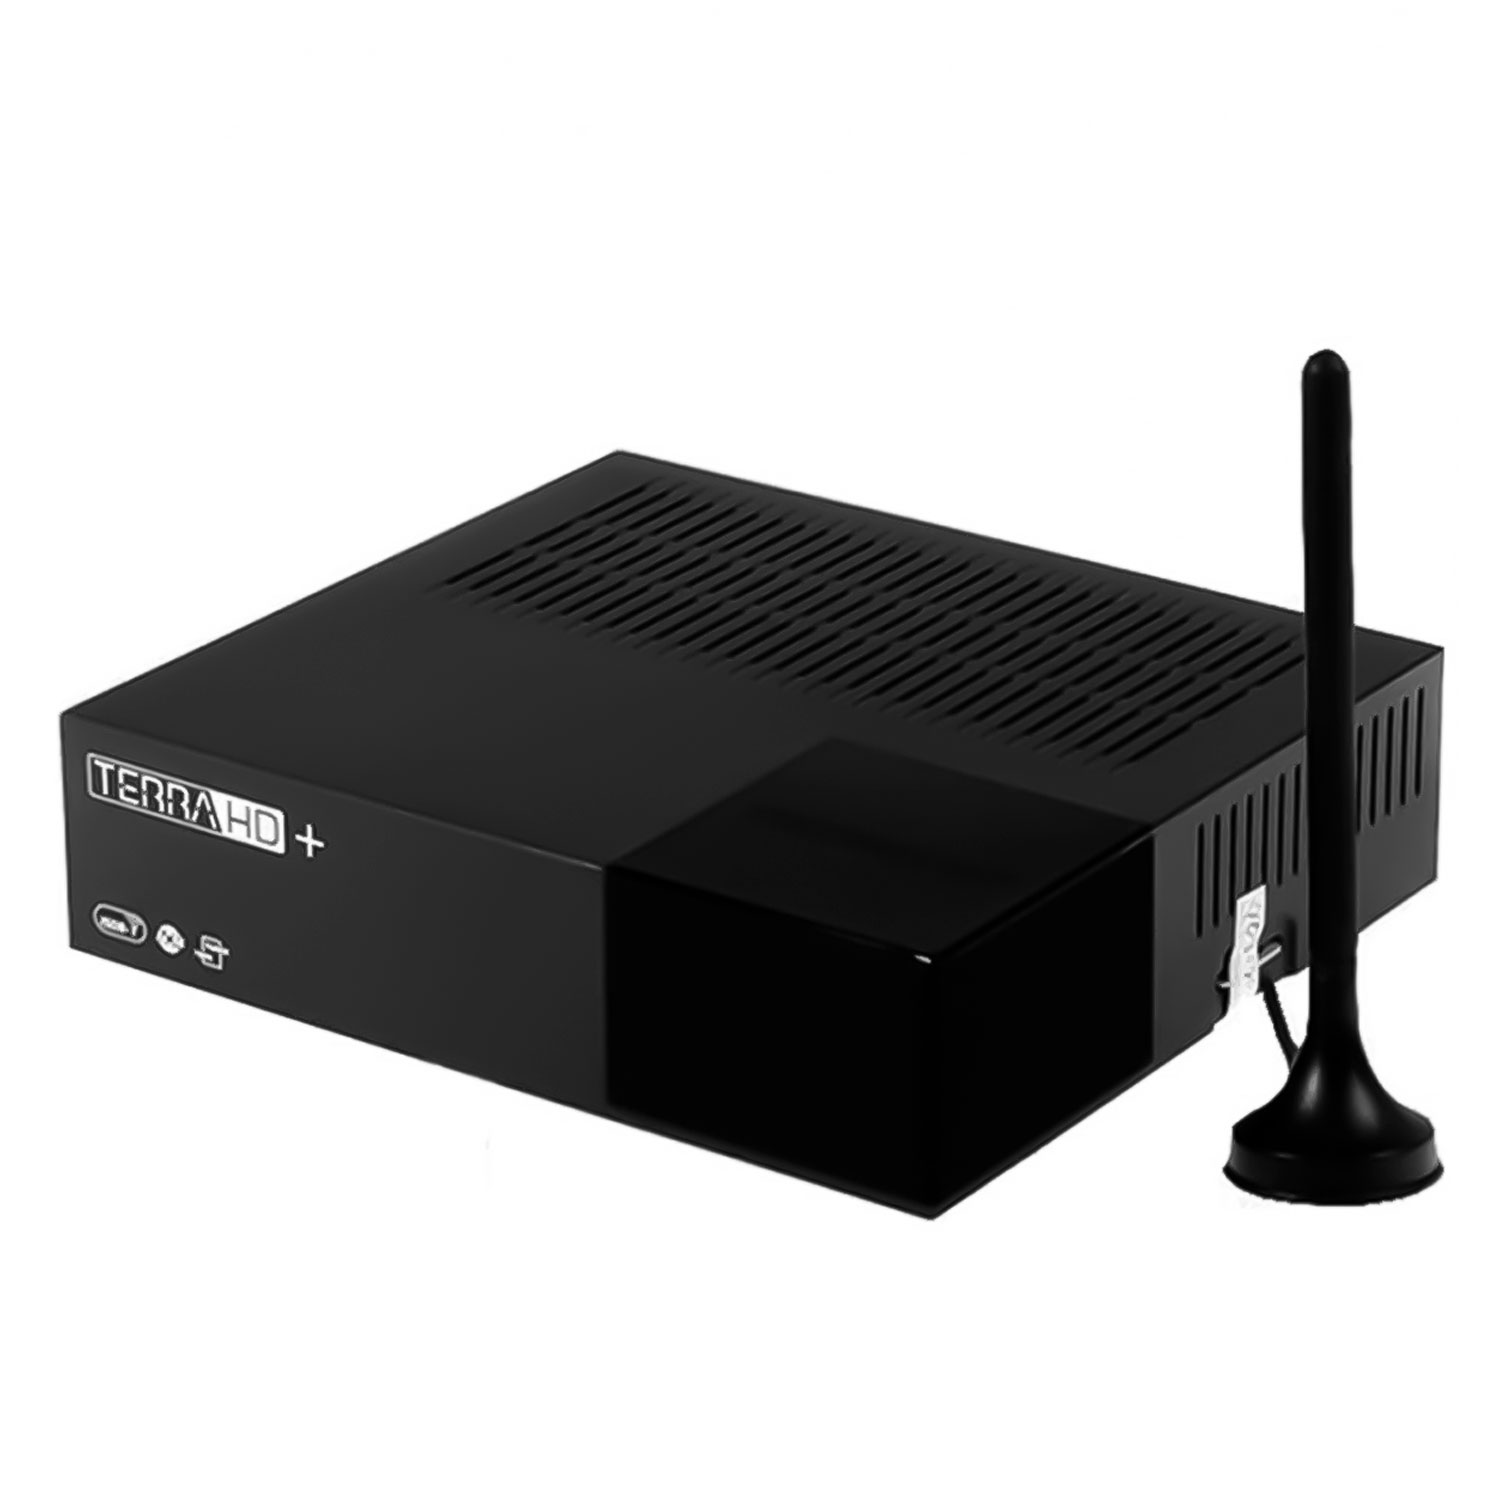 Receptor Tocomlink Terra HD+ Full HD Wi-Fi - Preto
